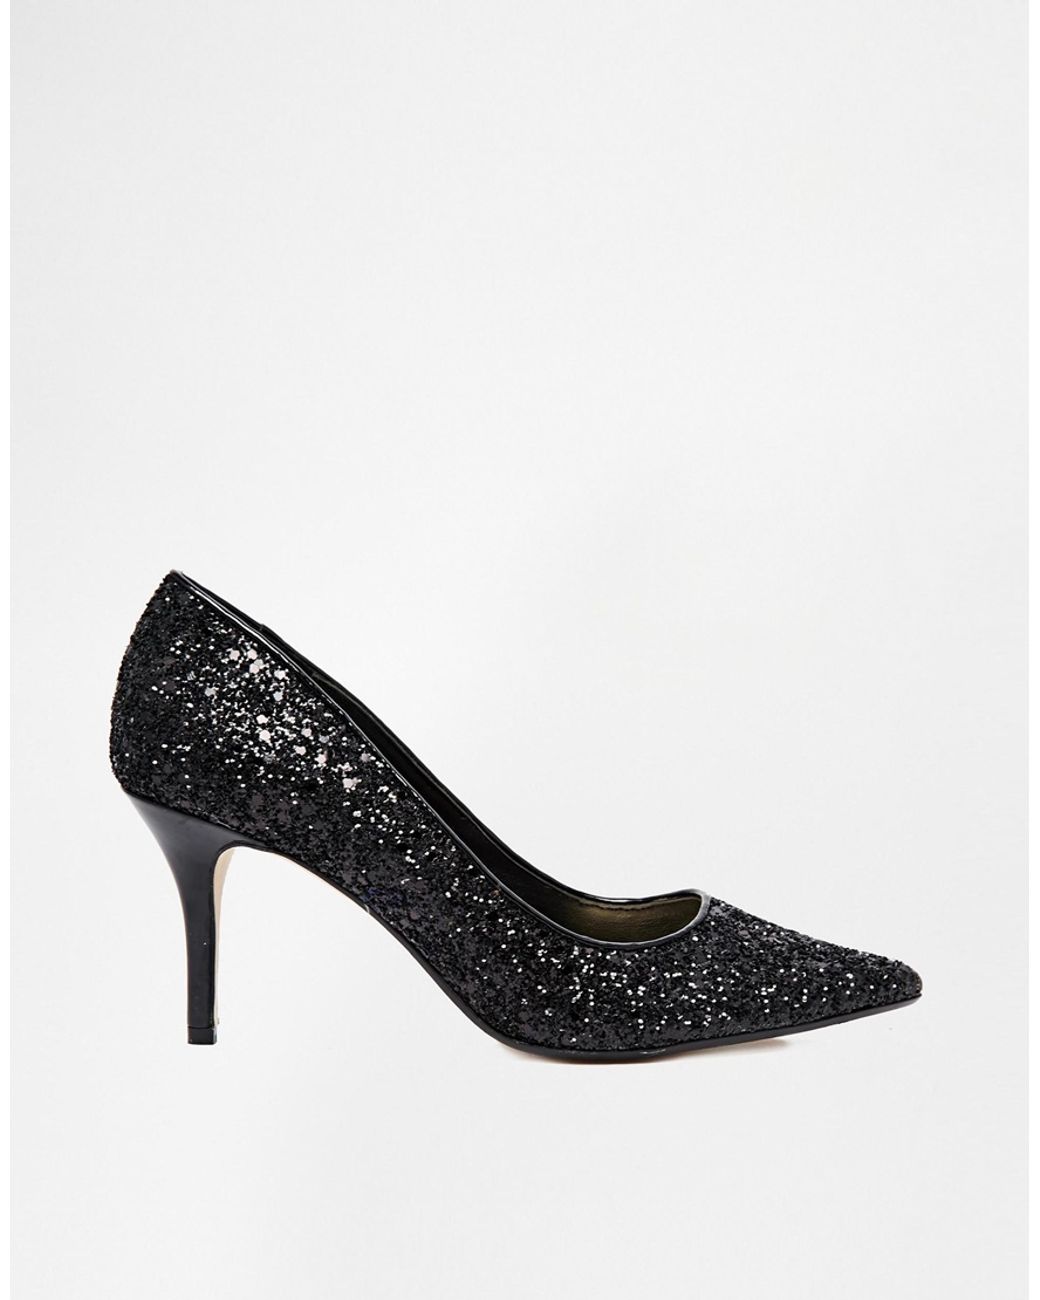 NEW IDIFU Black Glitter Sparkle Point Toe Ankle Strap Low Heels Size 6  Shoes | eBay